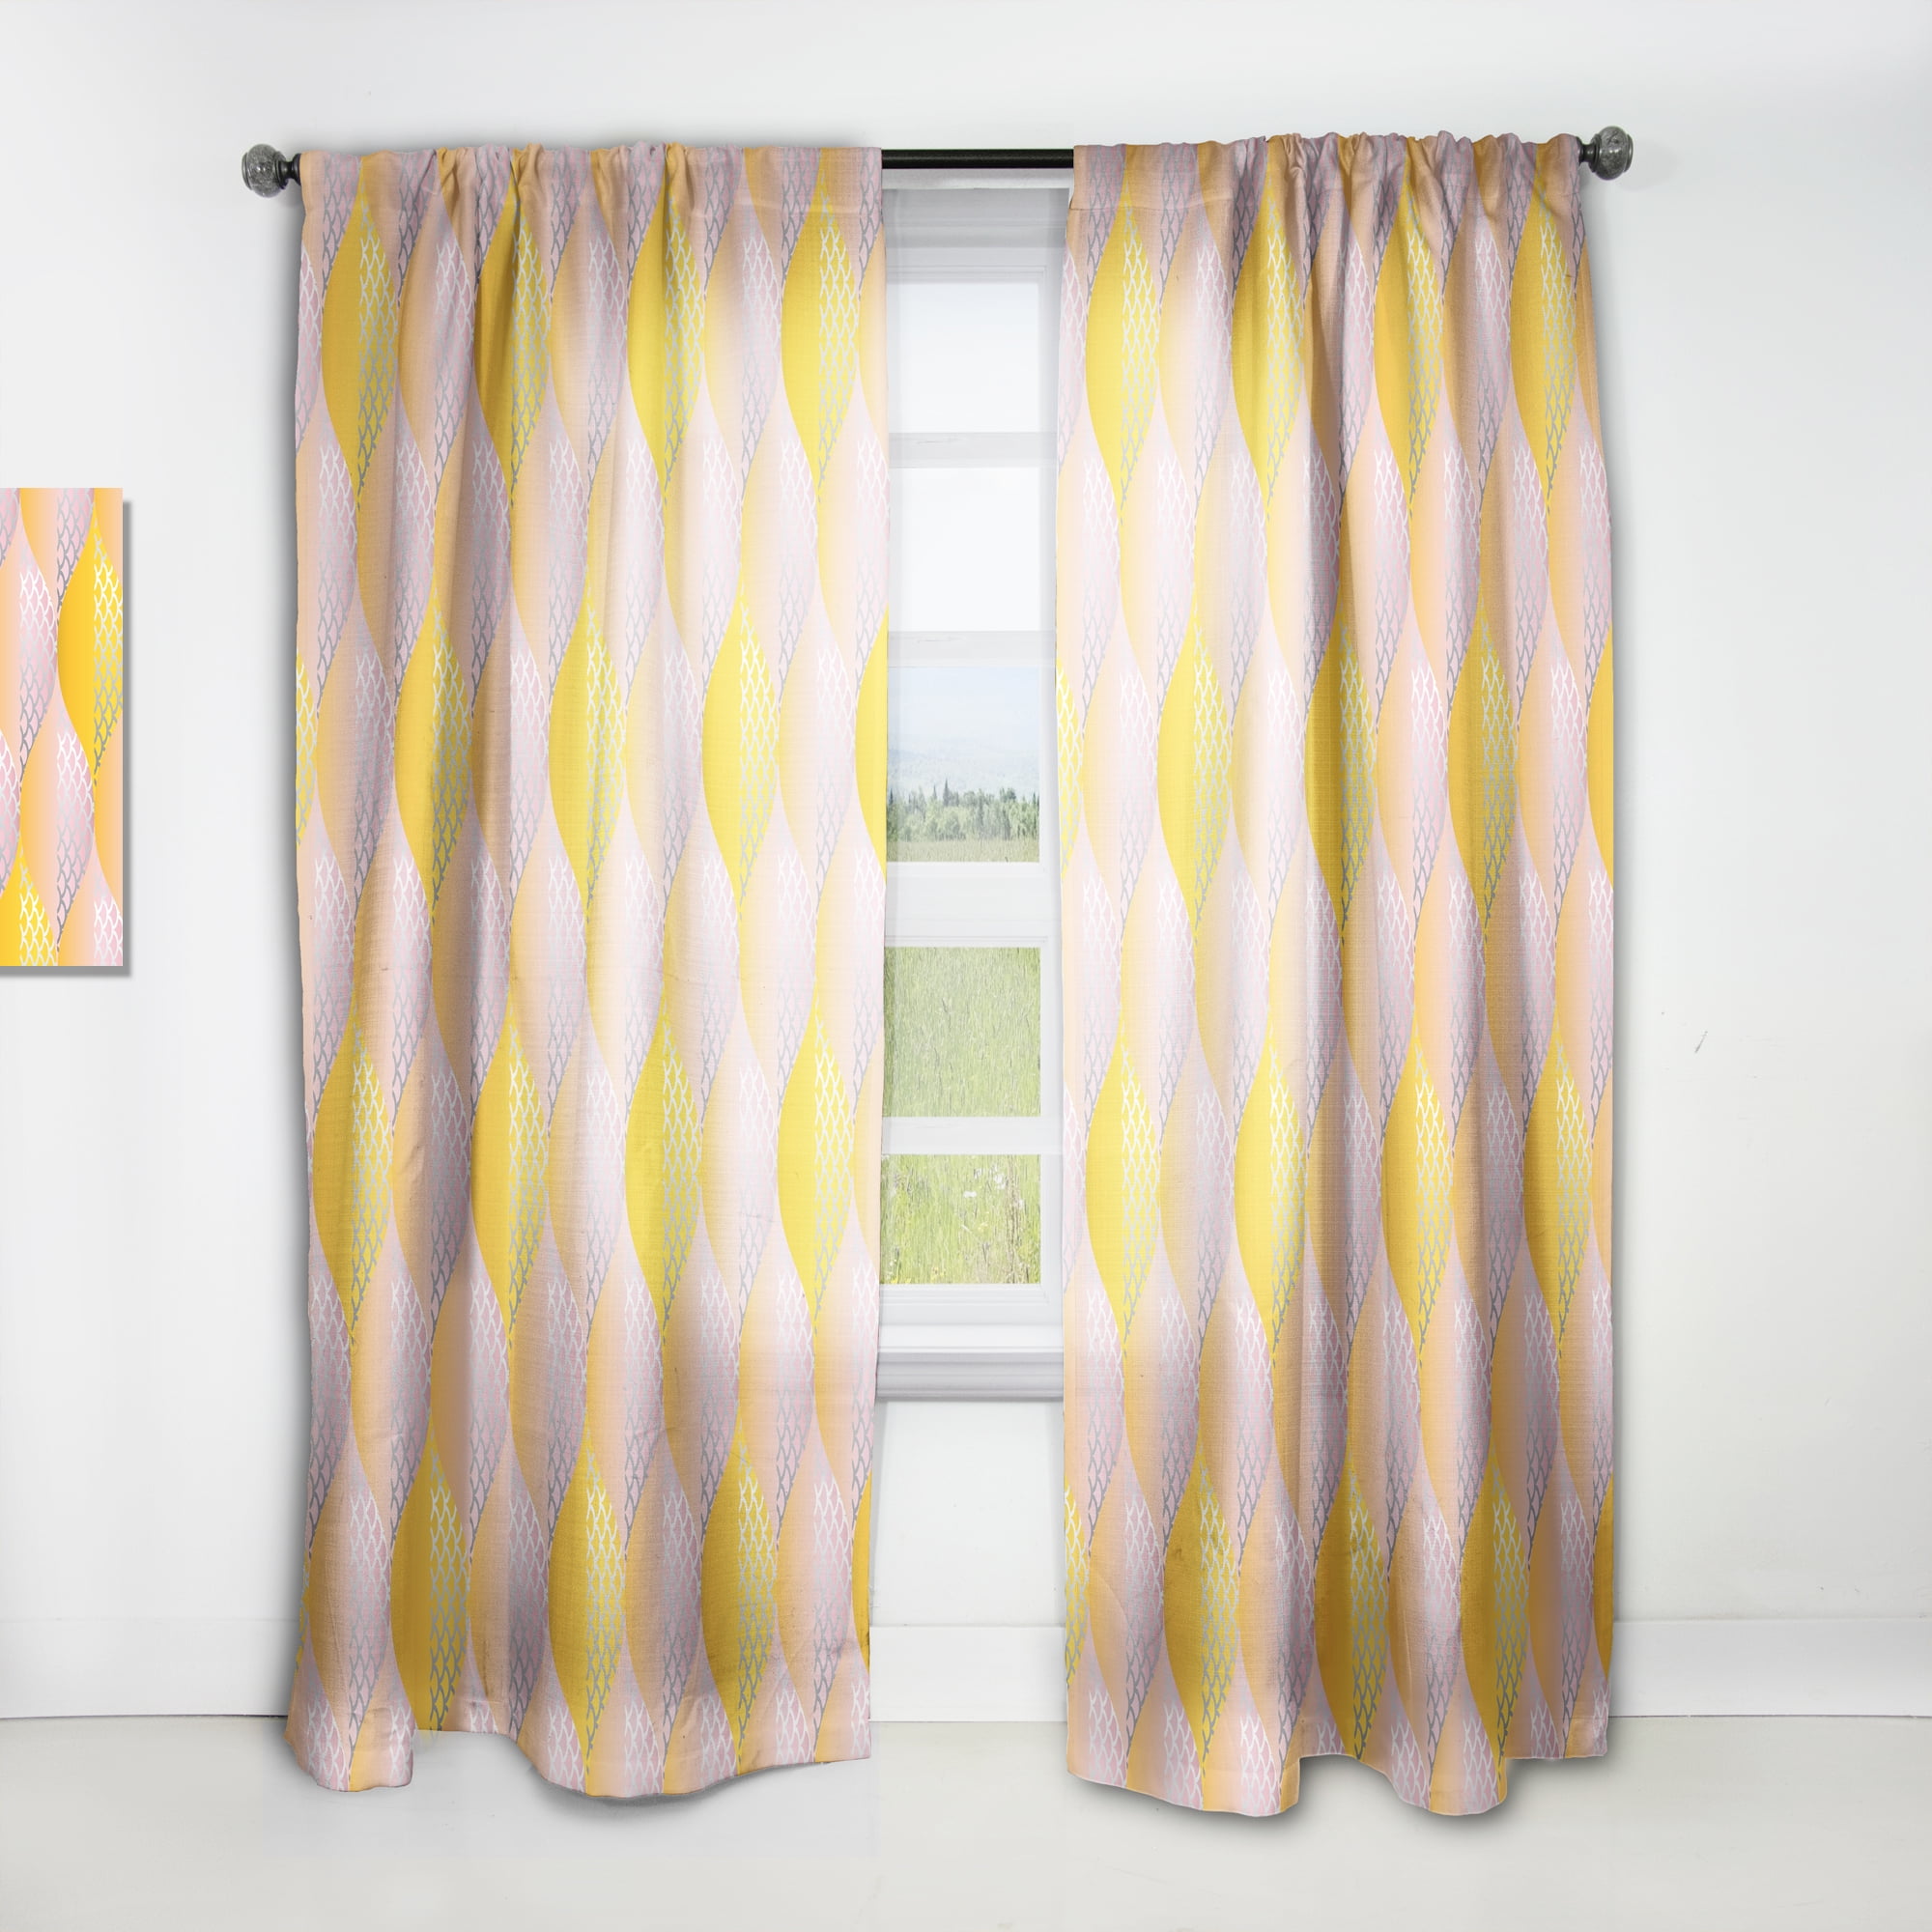  Alishomtll 4 Pcs Abstract Mid Century Shower Curtain